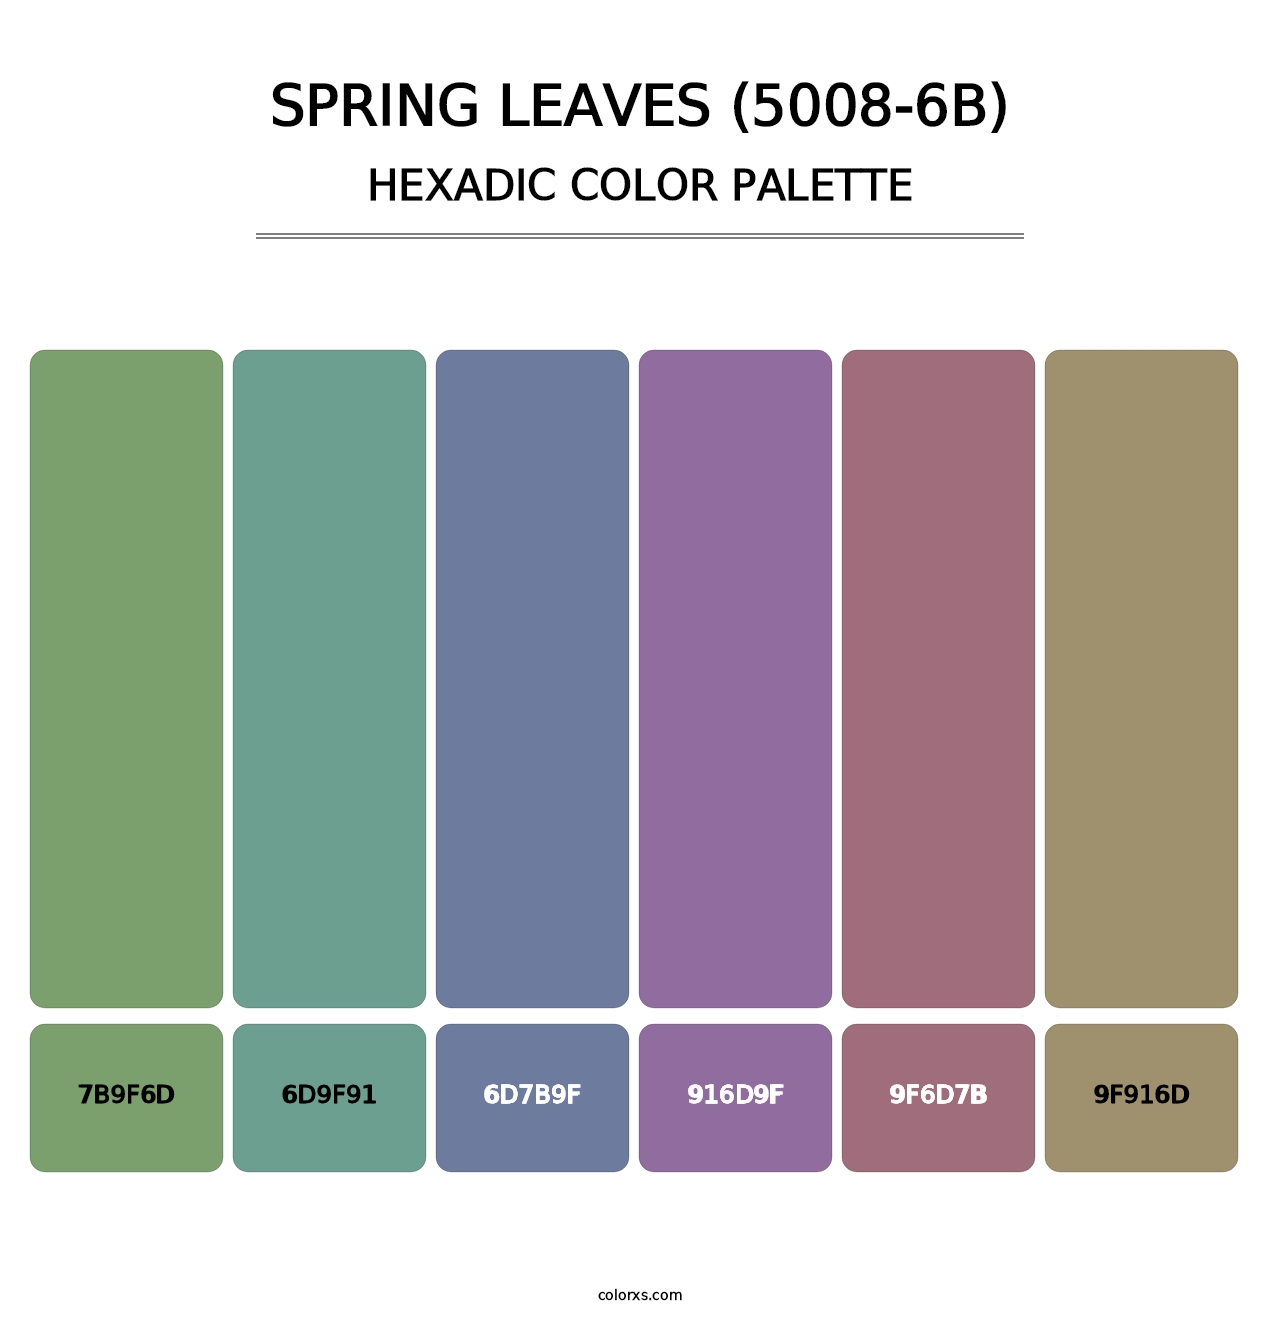 Spring Leaves (5008-6B) - Hexadic Color Palette